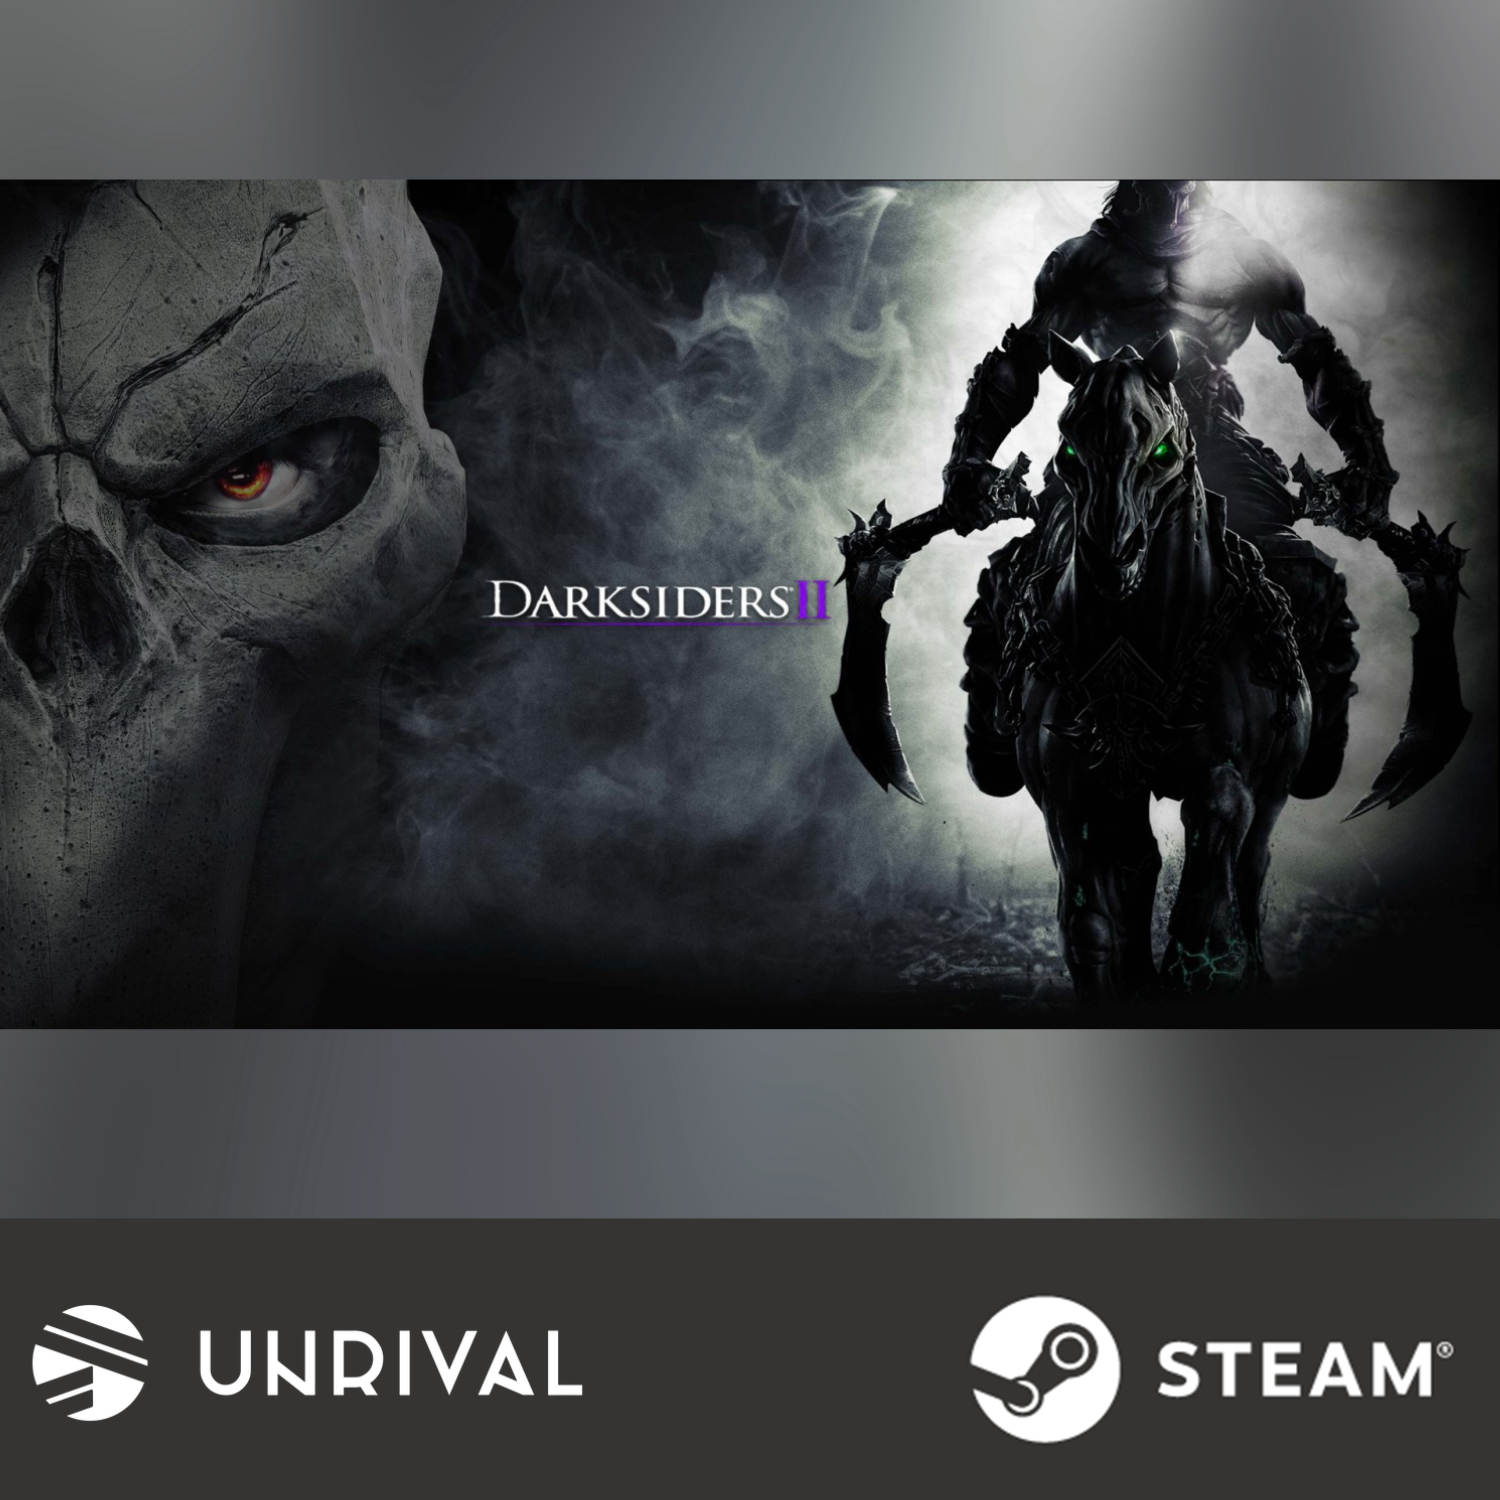 Darksiders 2 PC Digital Download Game (Single Player) - Unrival